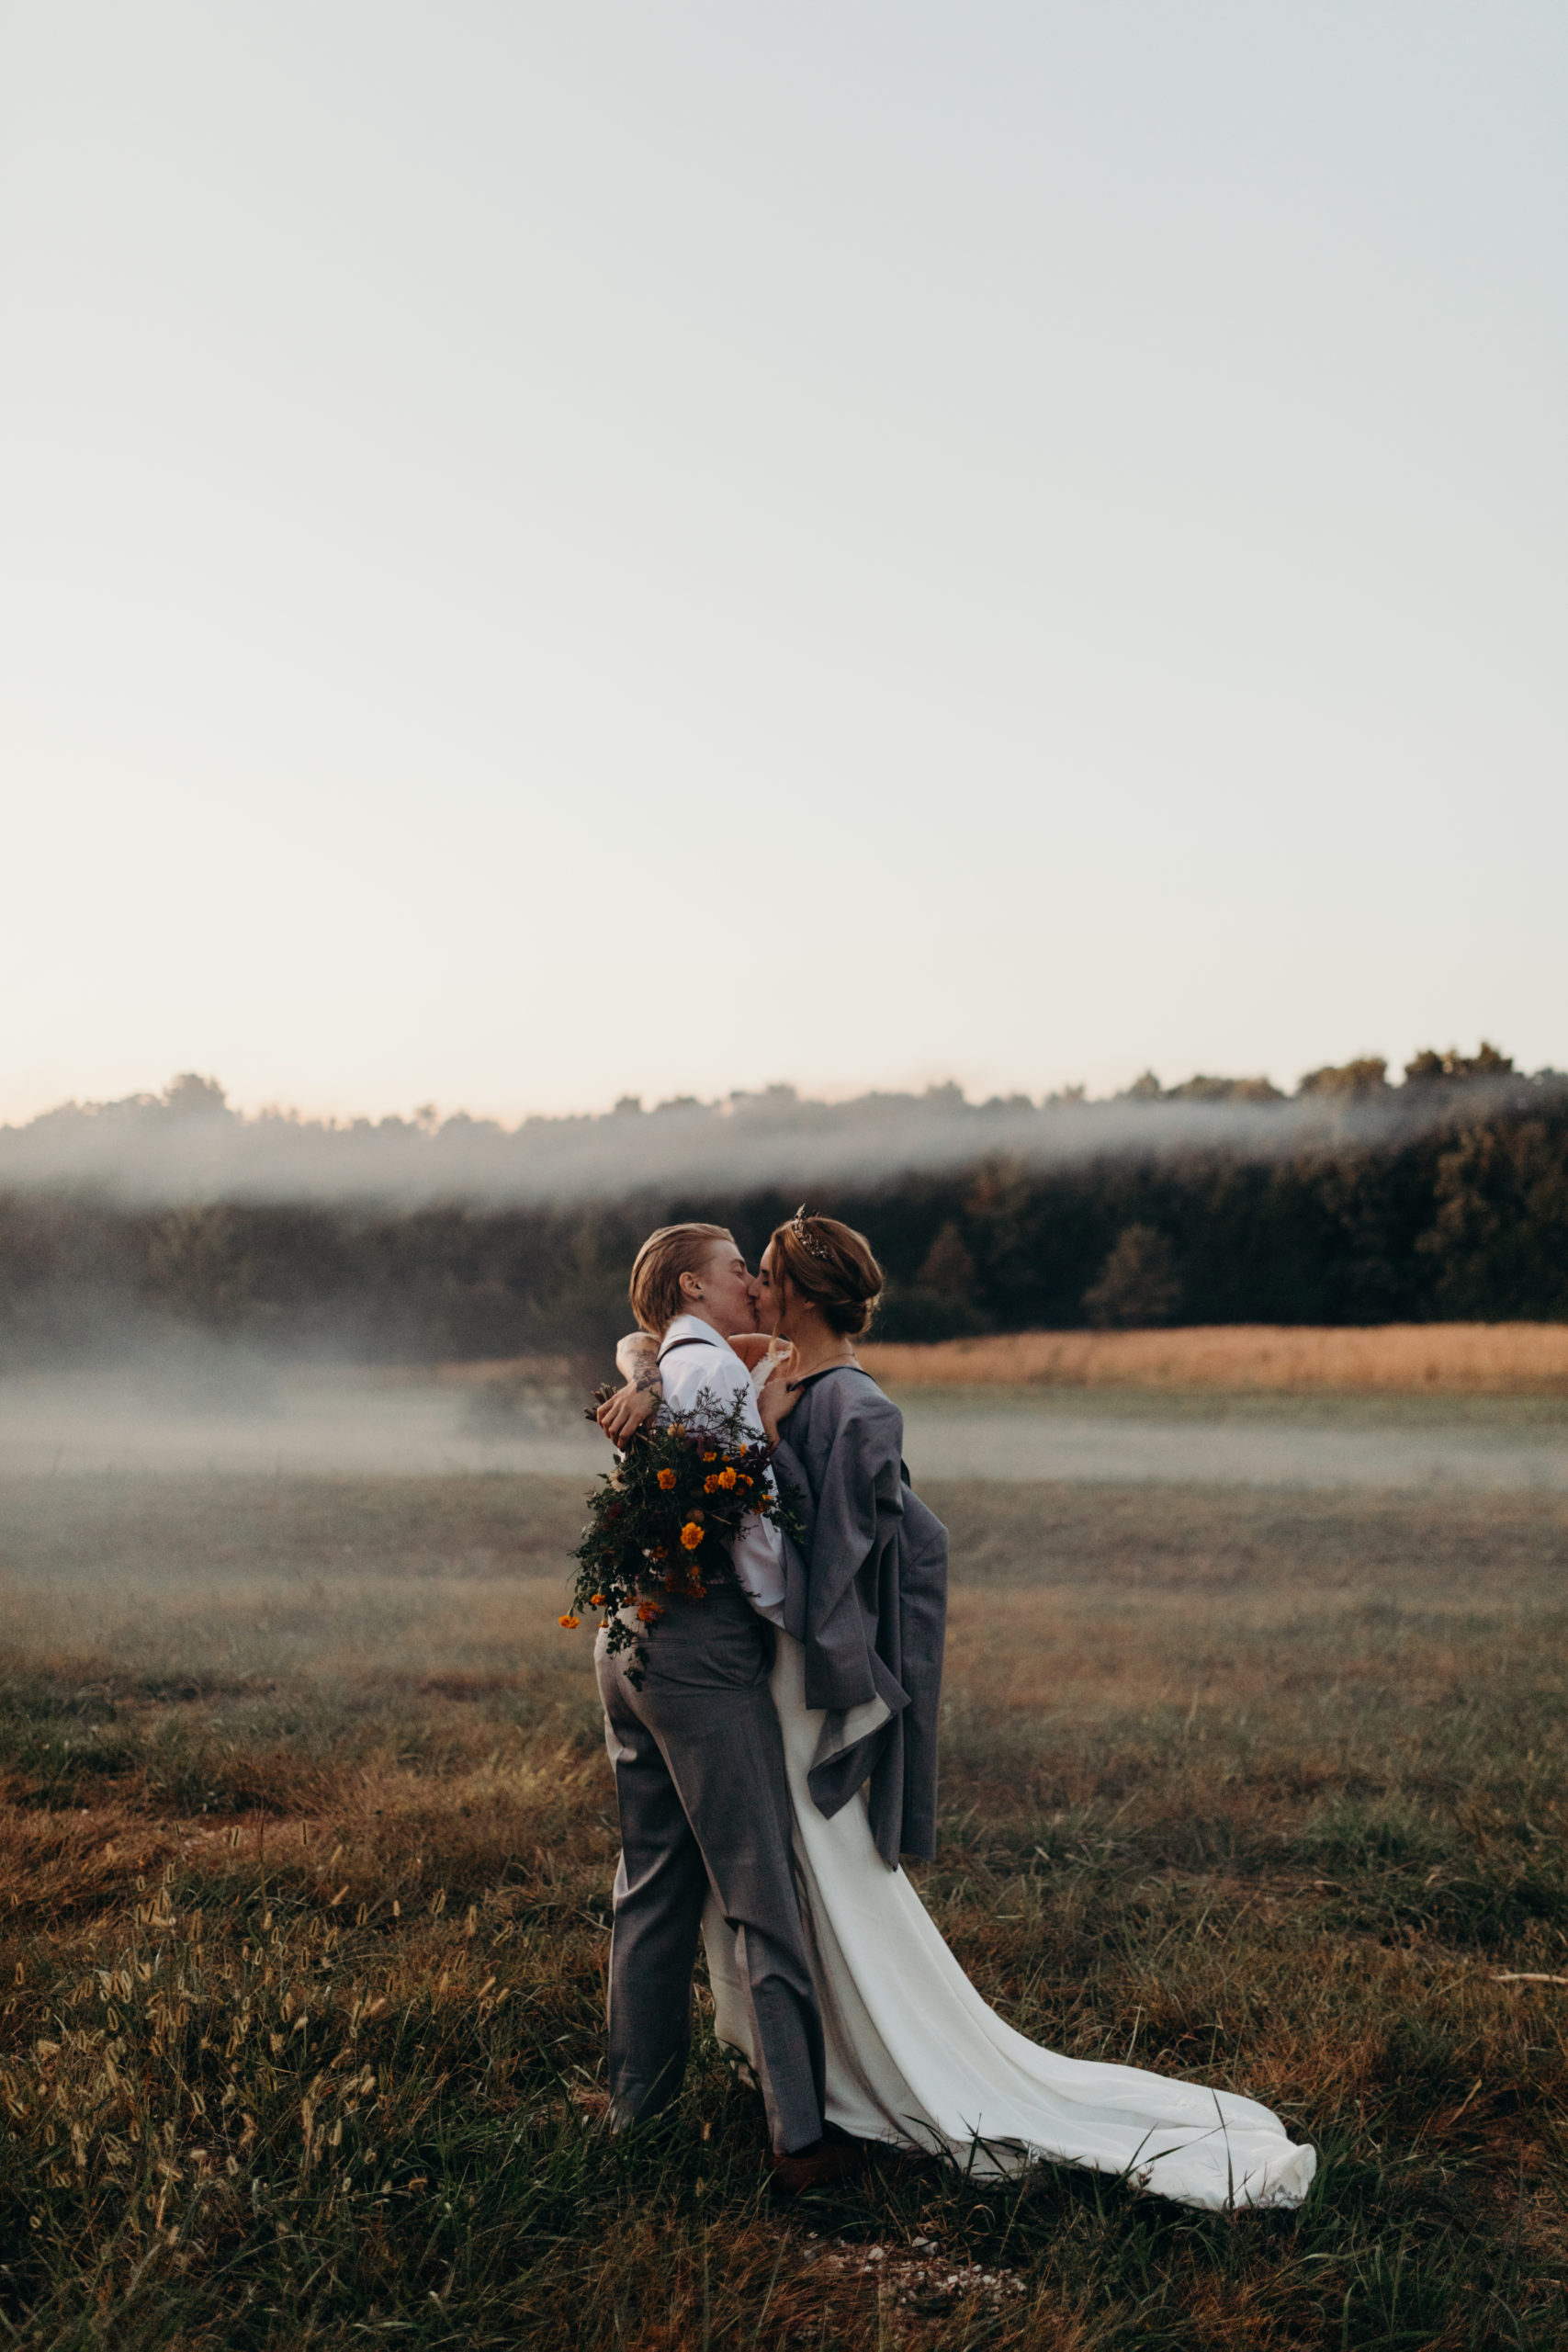 LGBT couple running through field in outdoor elopement ceremony